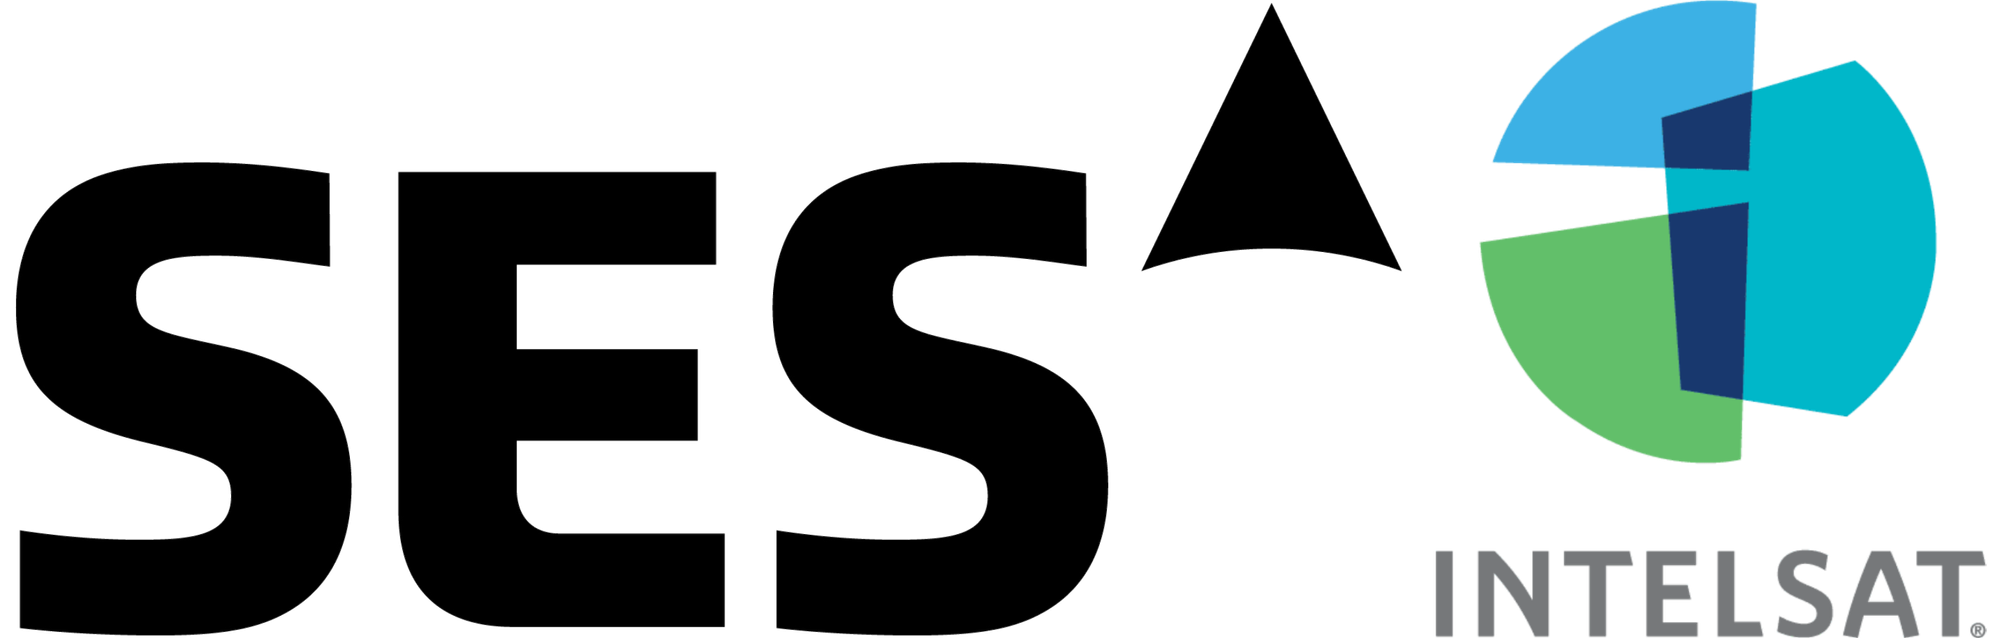 SES' logo (left) and Intelsat's logo (right).